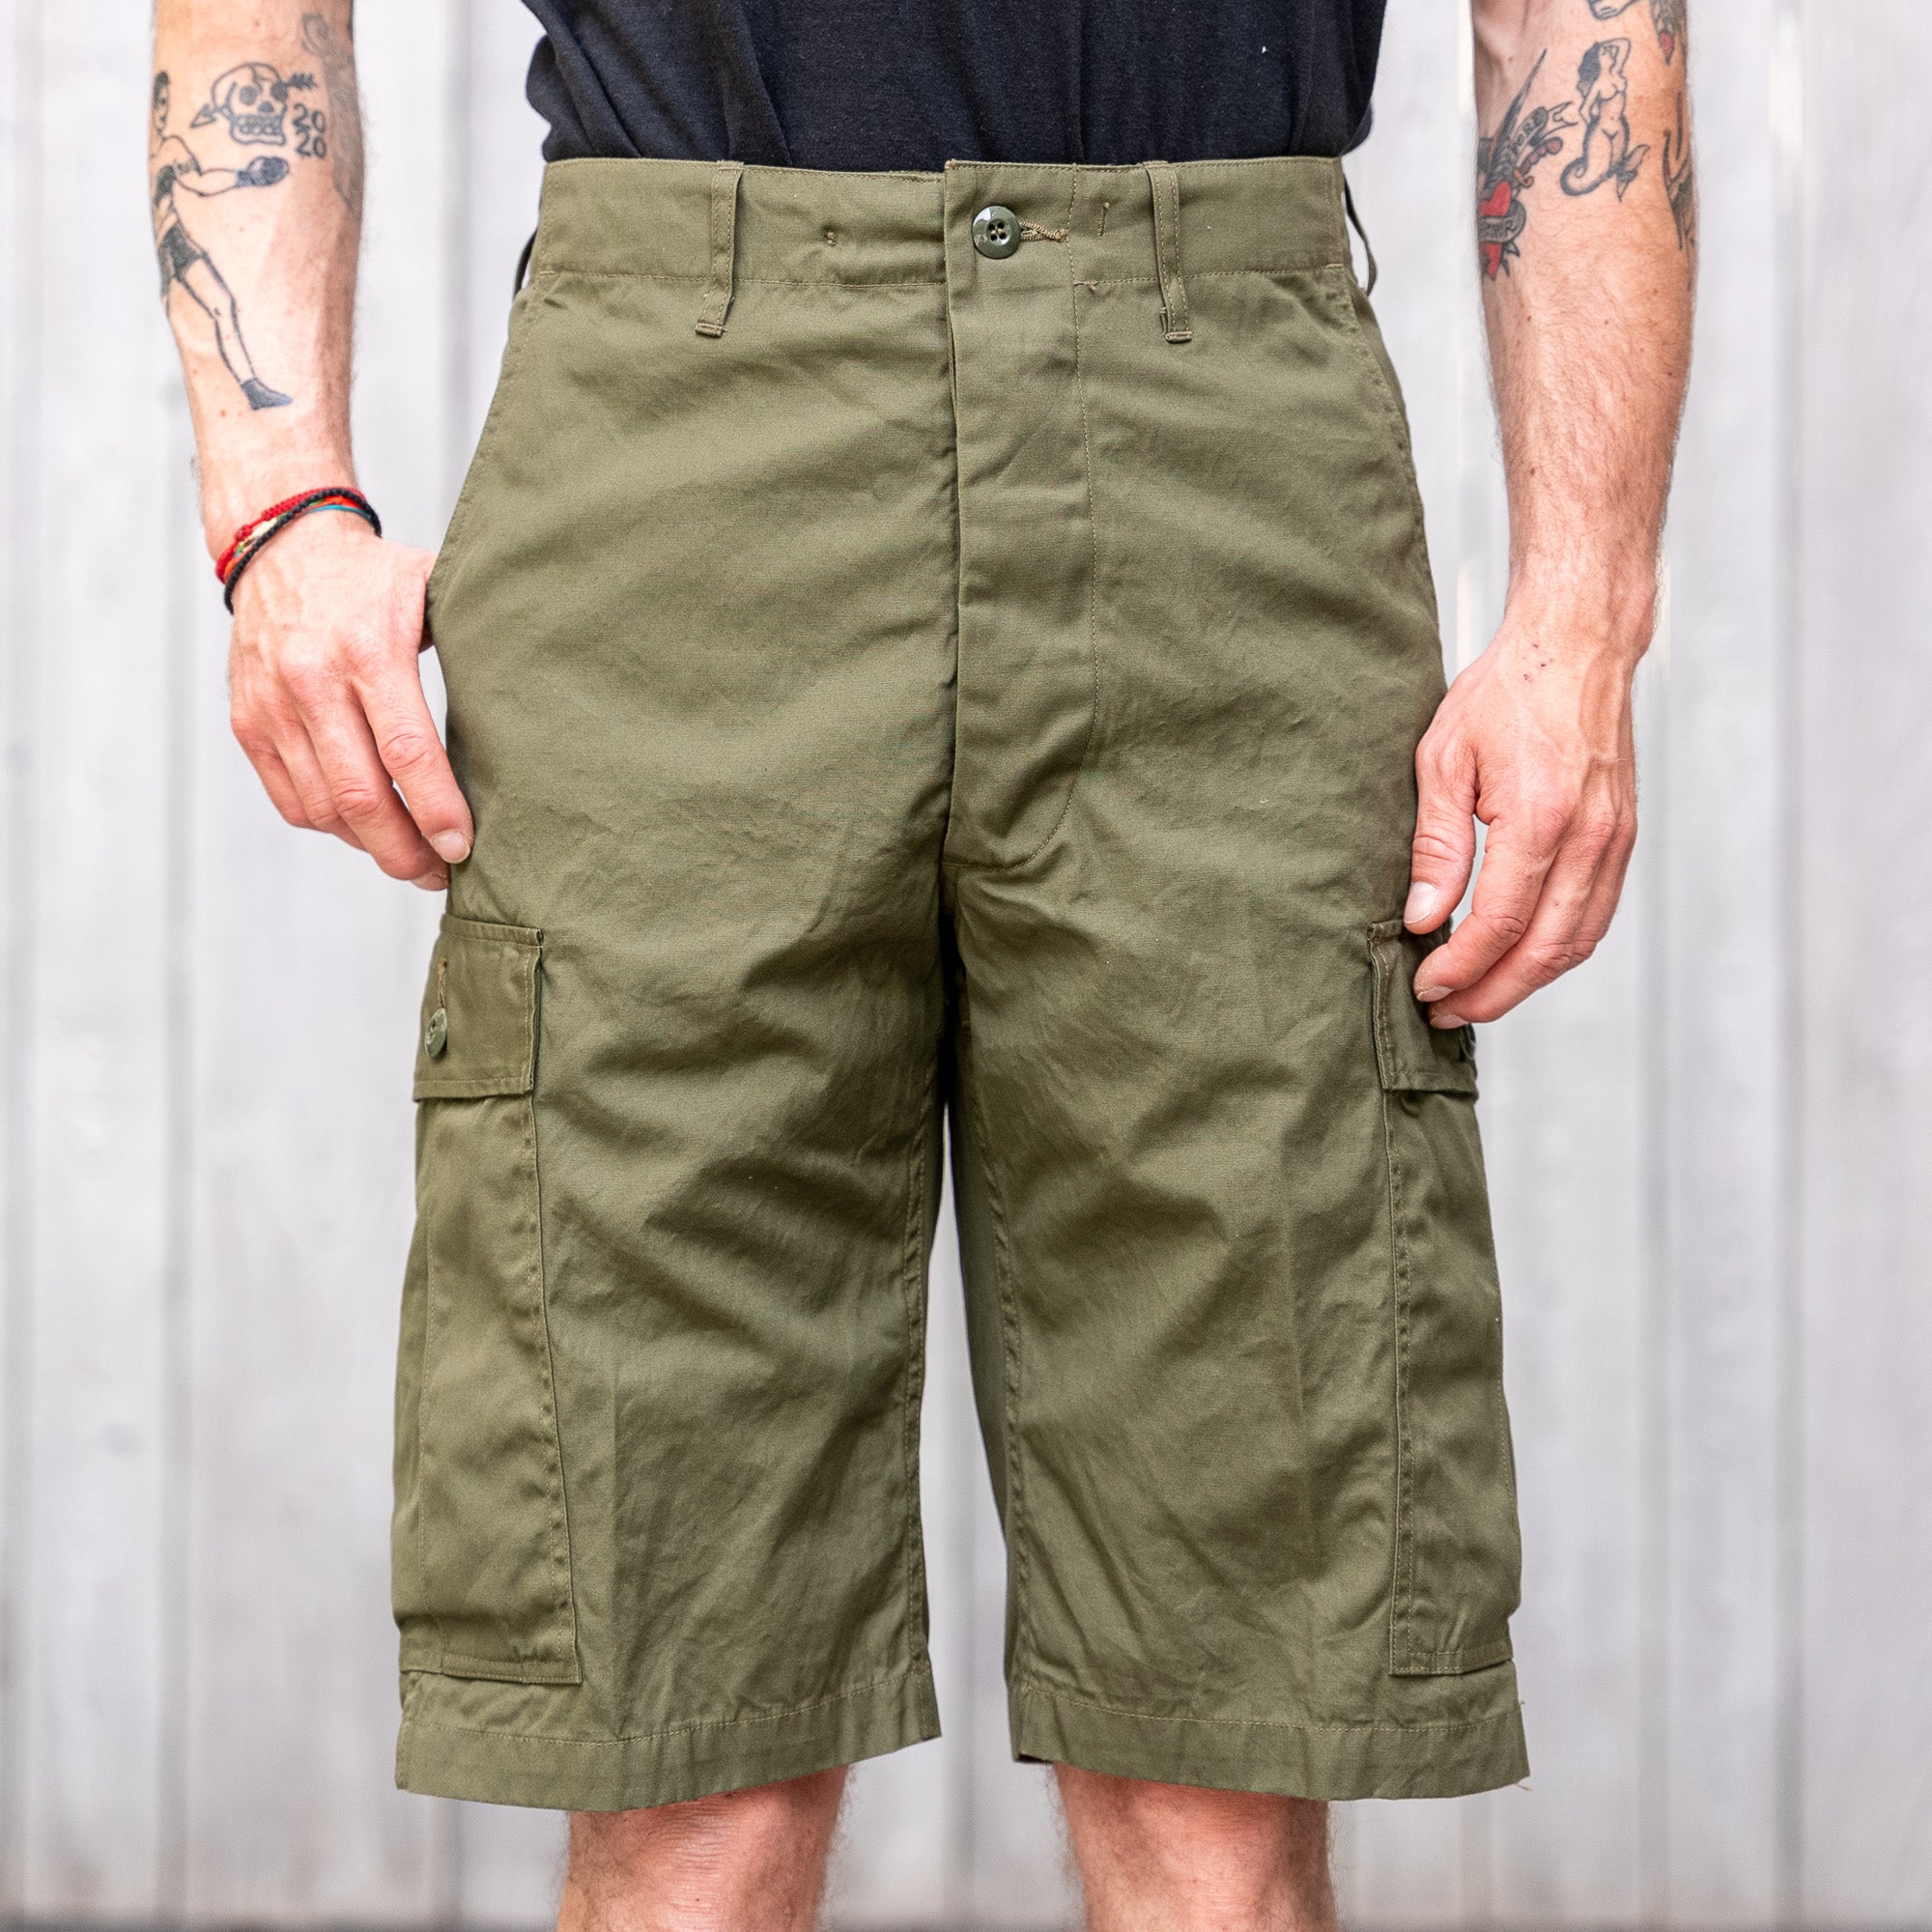 Buzz Rickson's OG-107 Army Shade Military Shorts – Olive Green